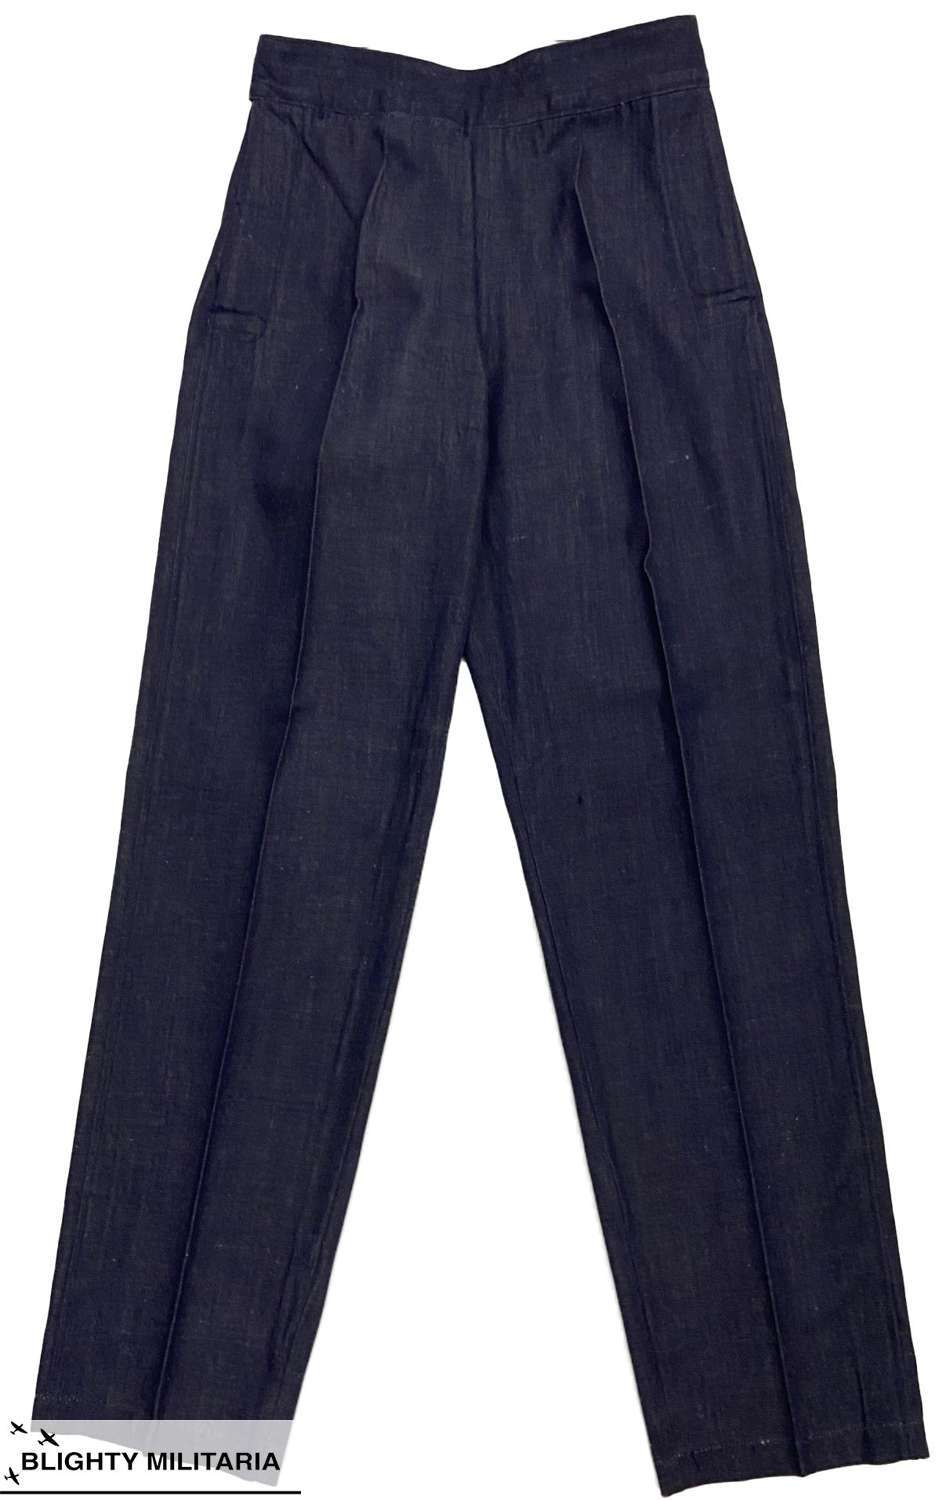 Original 1960s British Ladies Denim Workwear Trousers